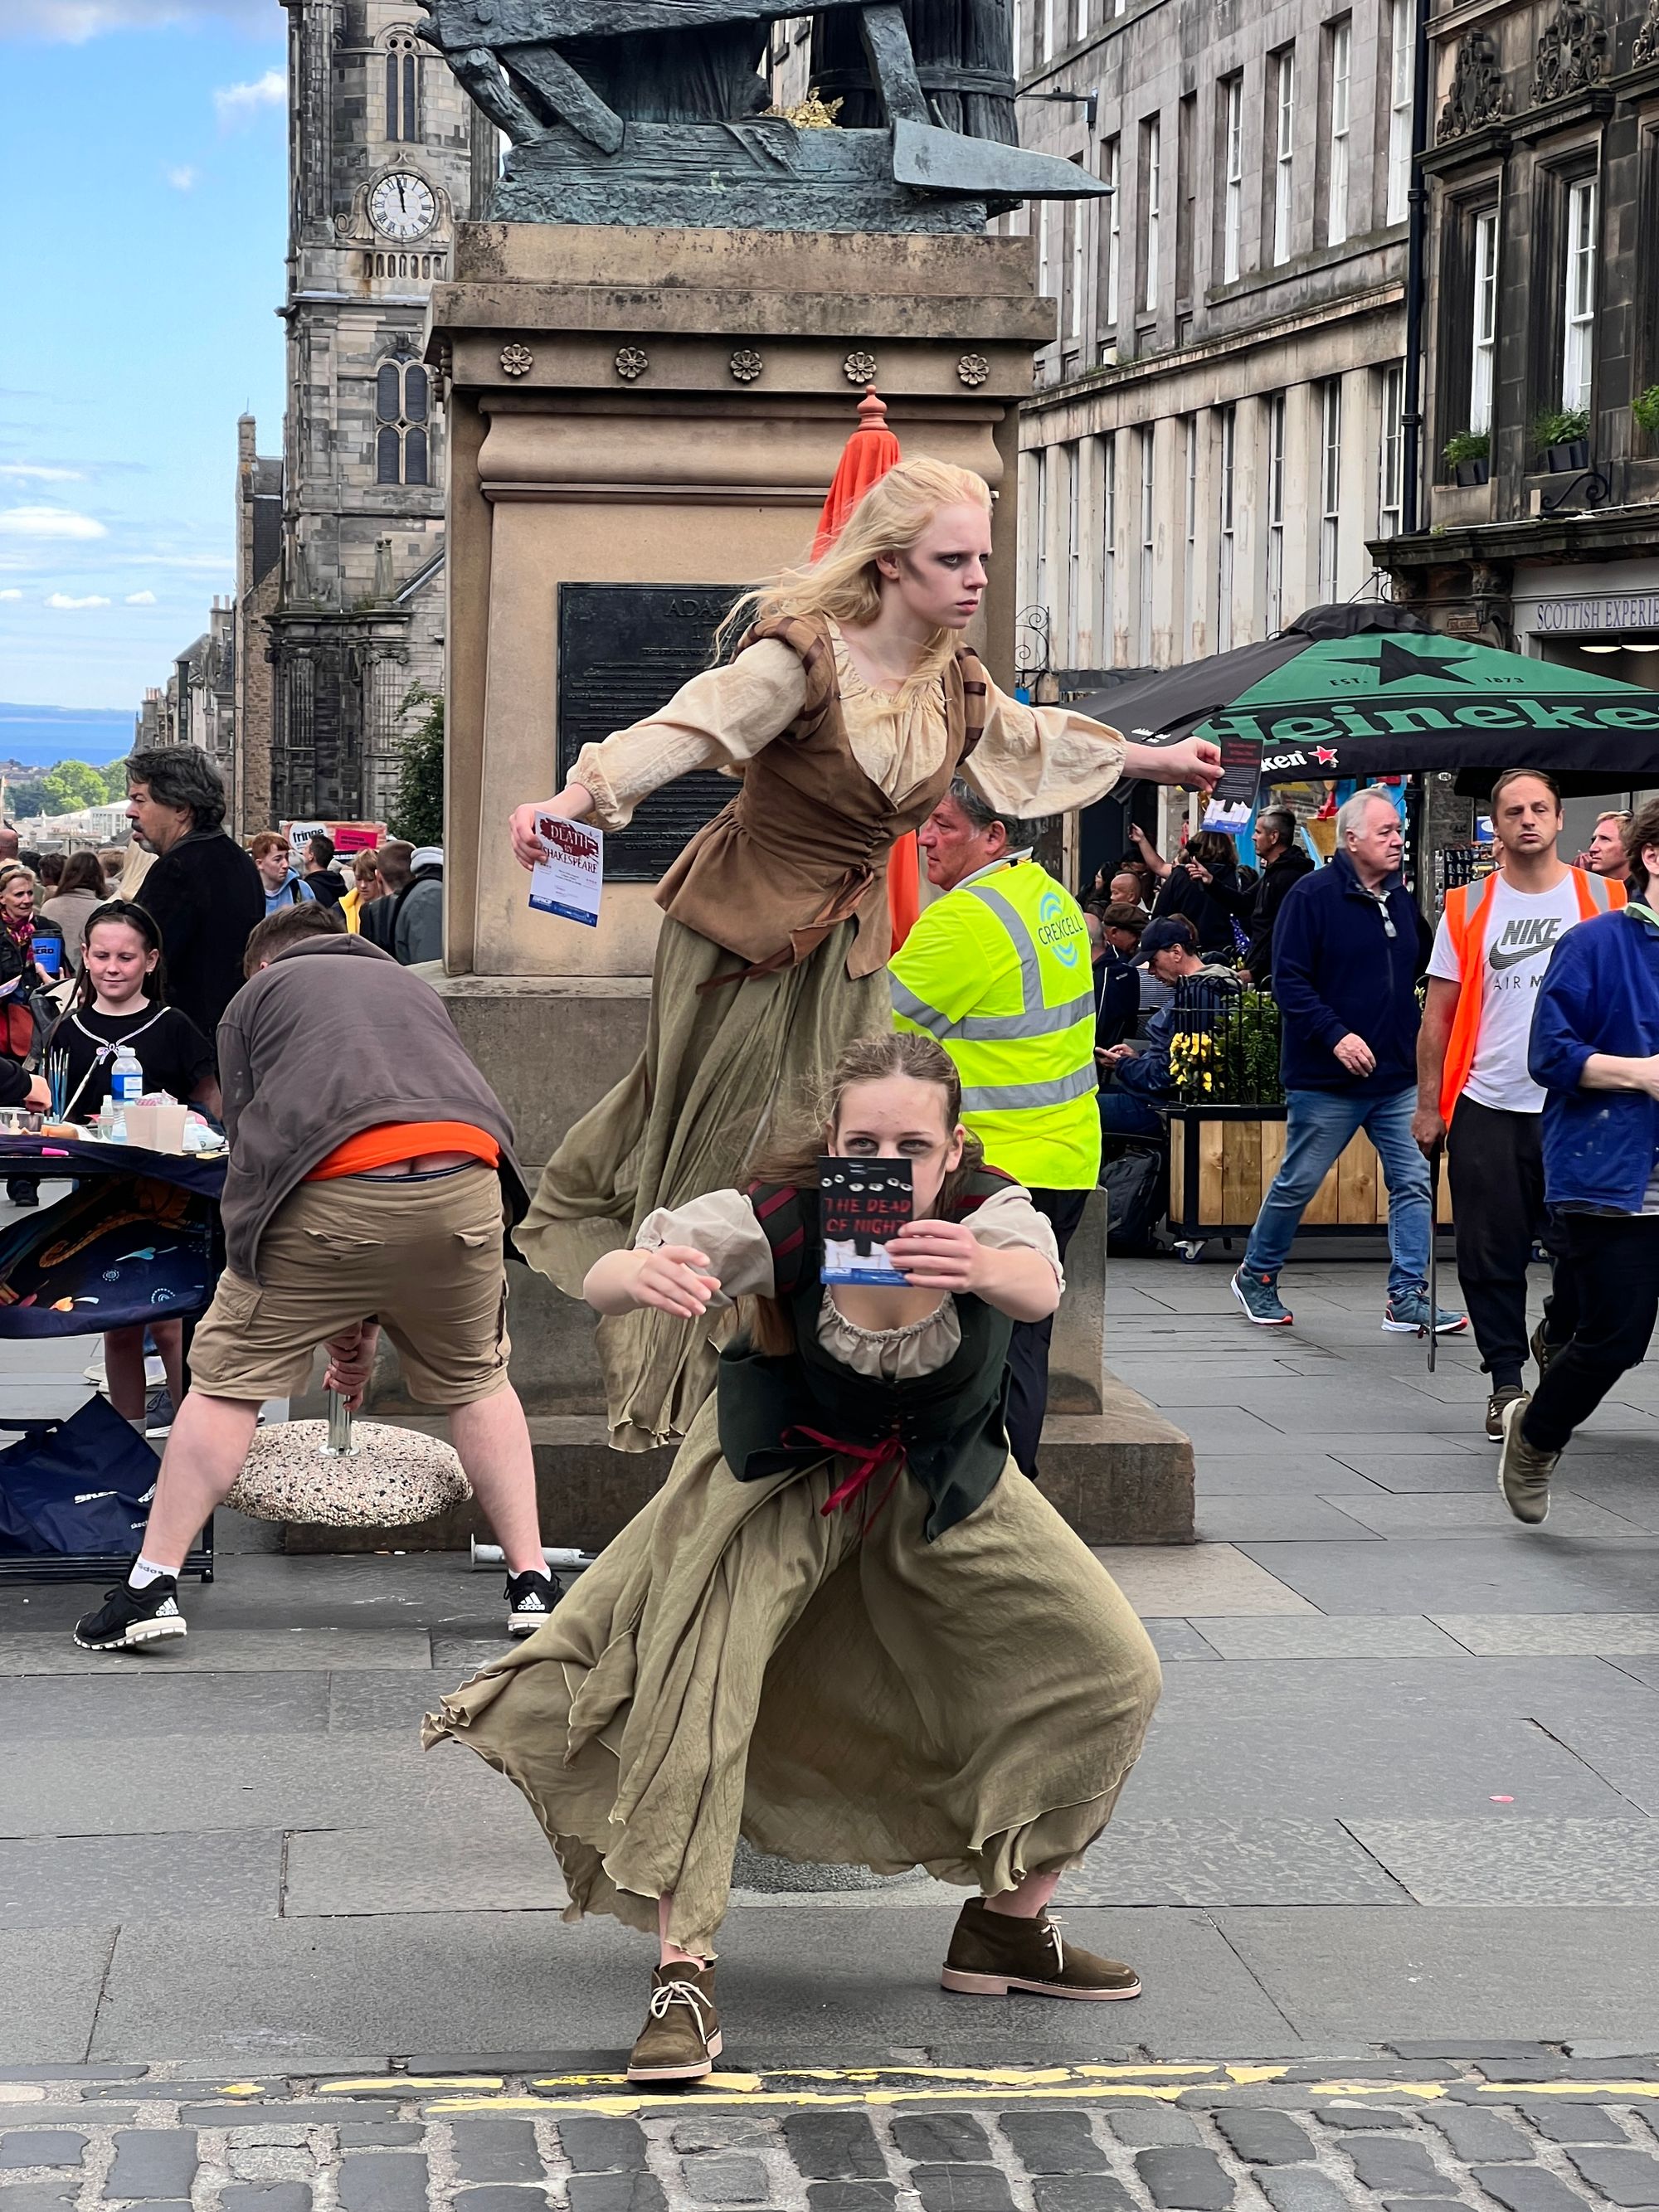 Our Edinburgh Fringe Experience